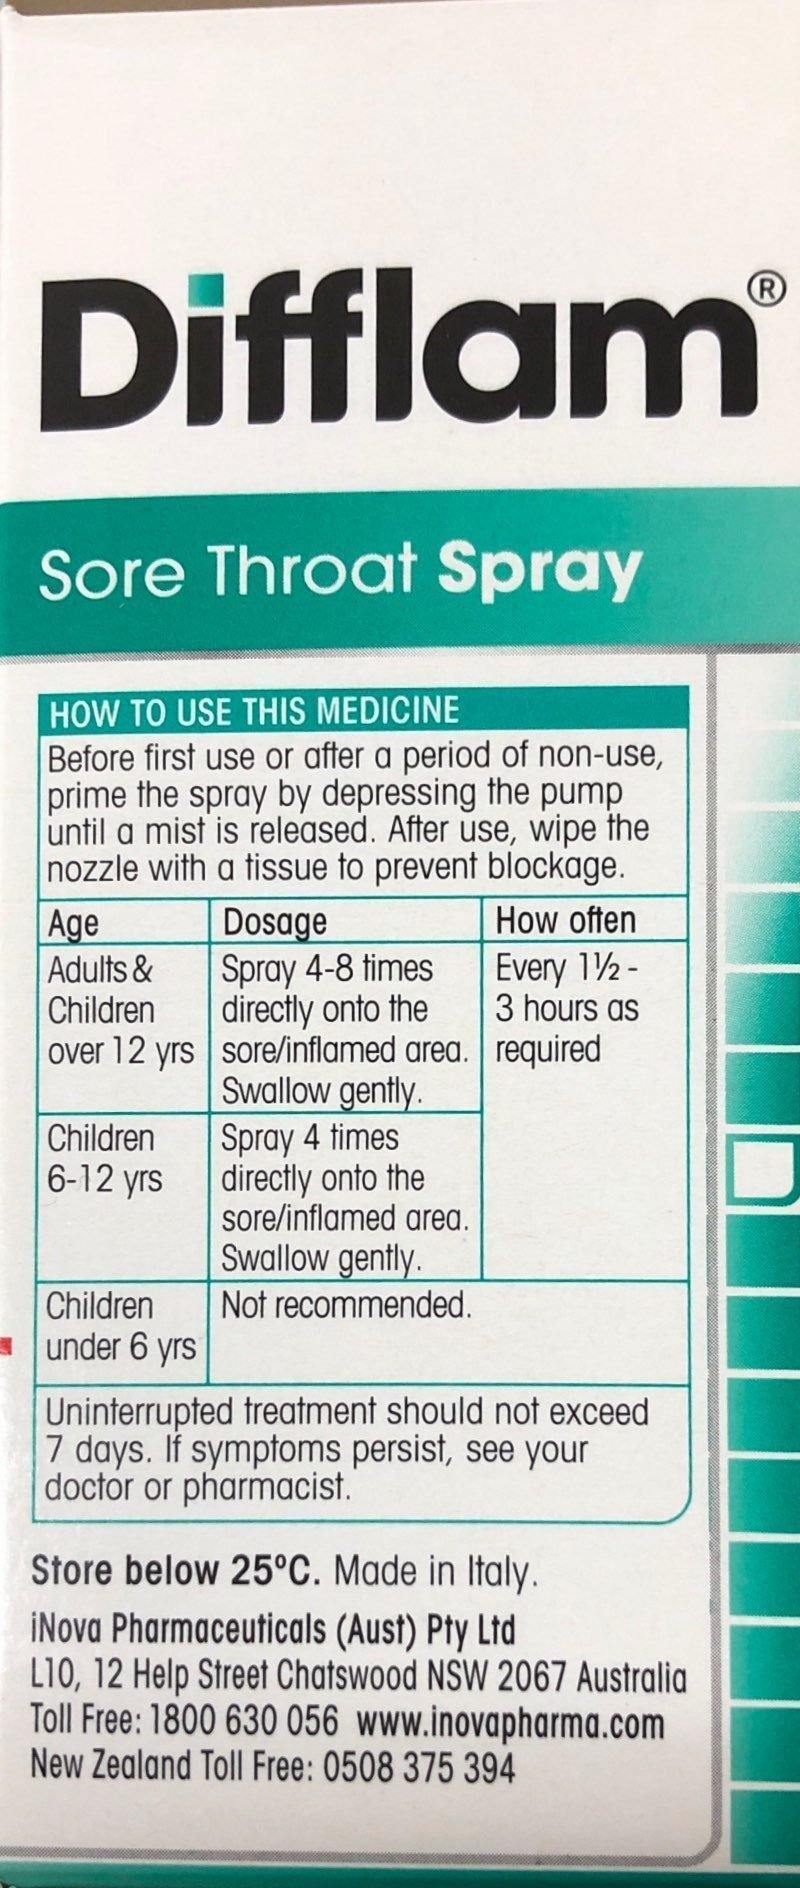 Difflam Sore throat Spray 30ml - DominionRoadPharmacy